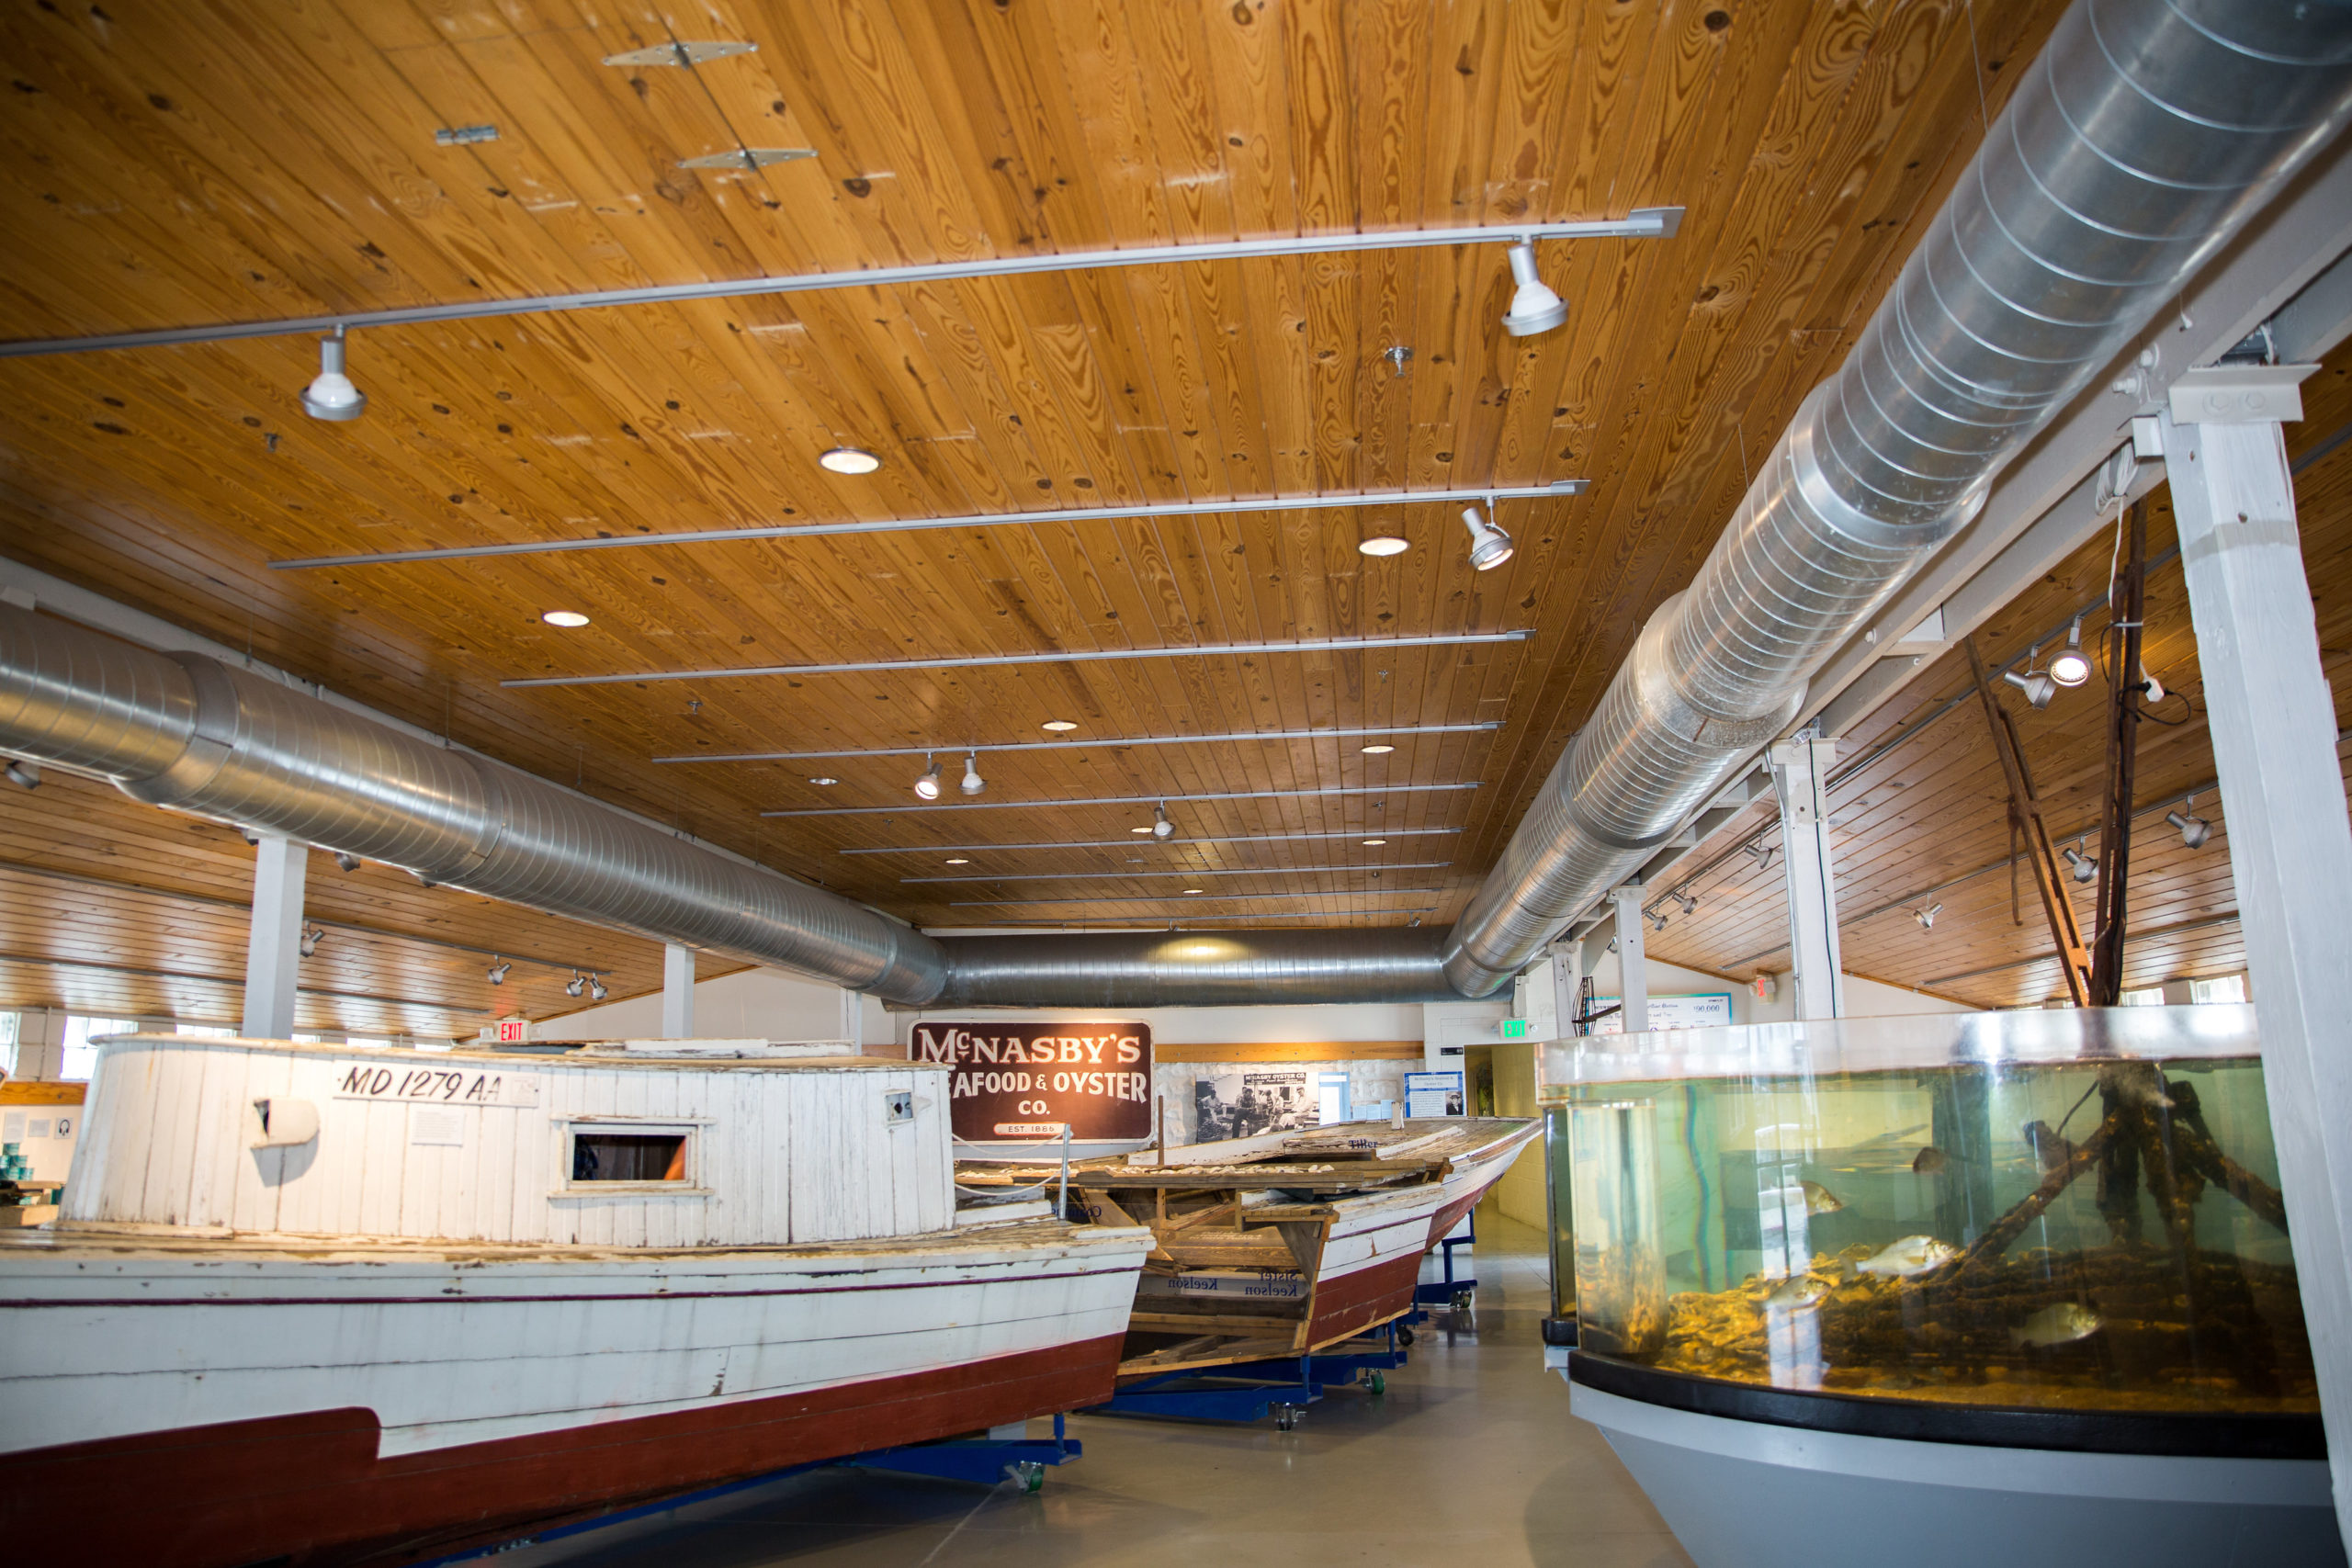 Annapolis Maritime Museum, Annapolis, Maryland